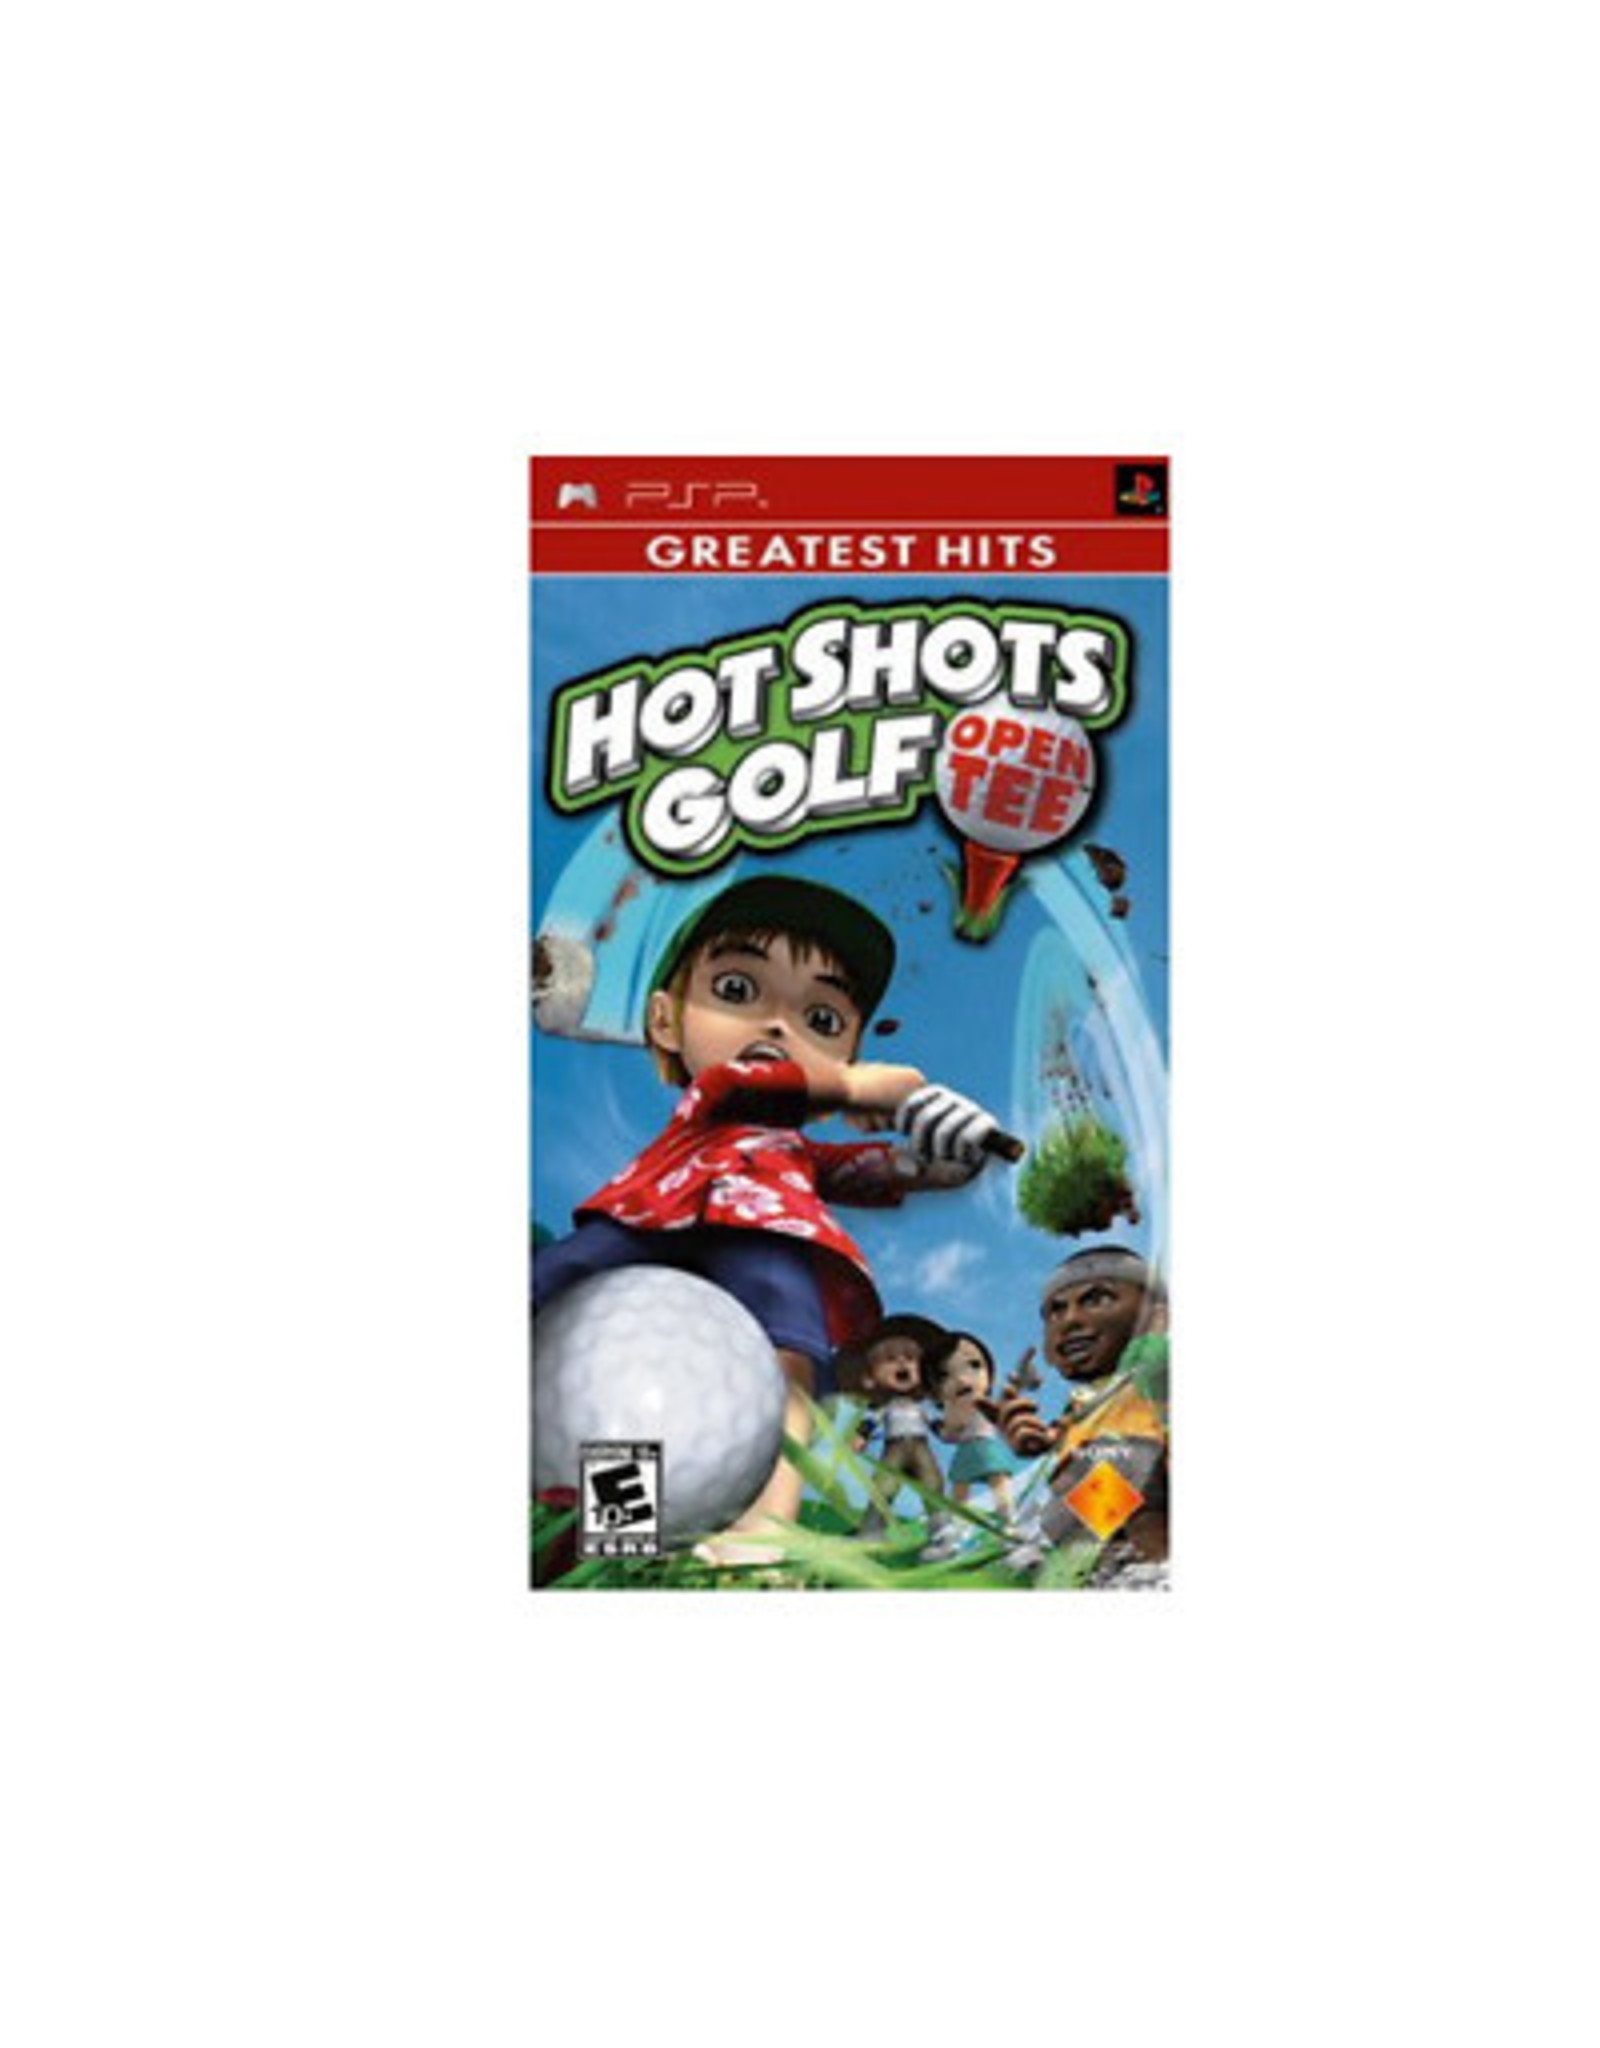 PSP Hot Shots Golf Open Tee (Greatest Hits, CiB)